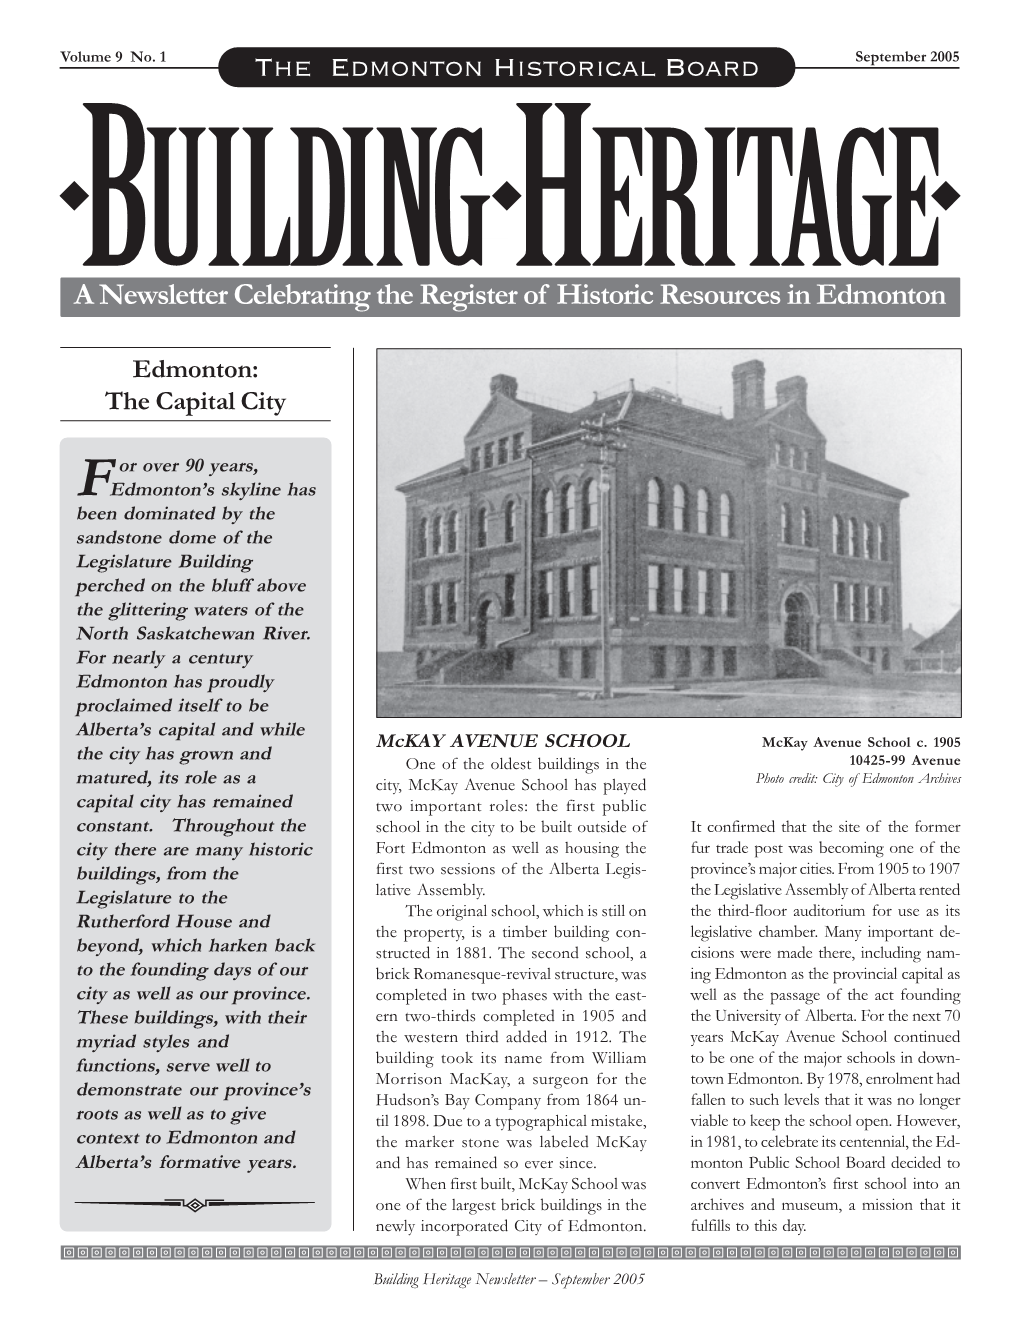 Building Heritage News